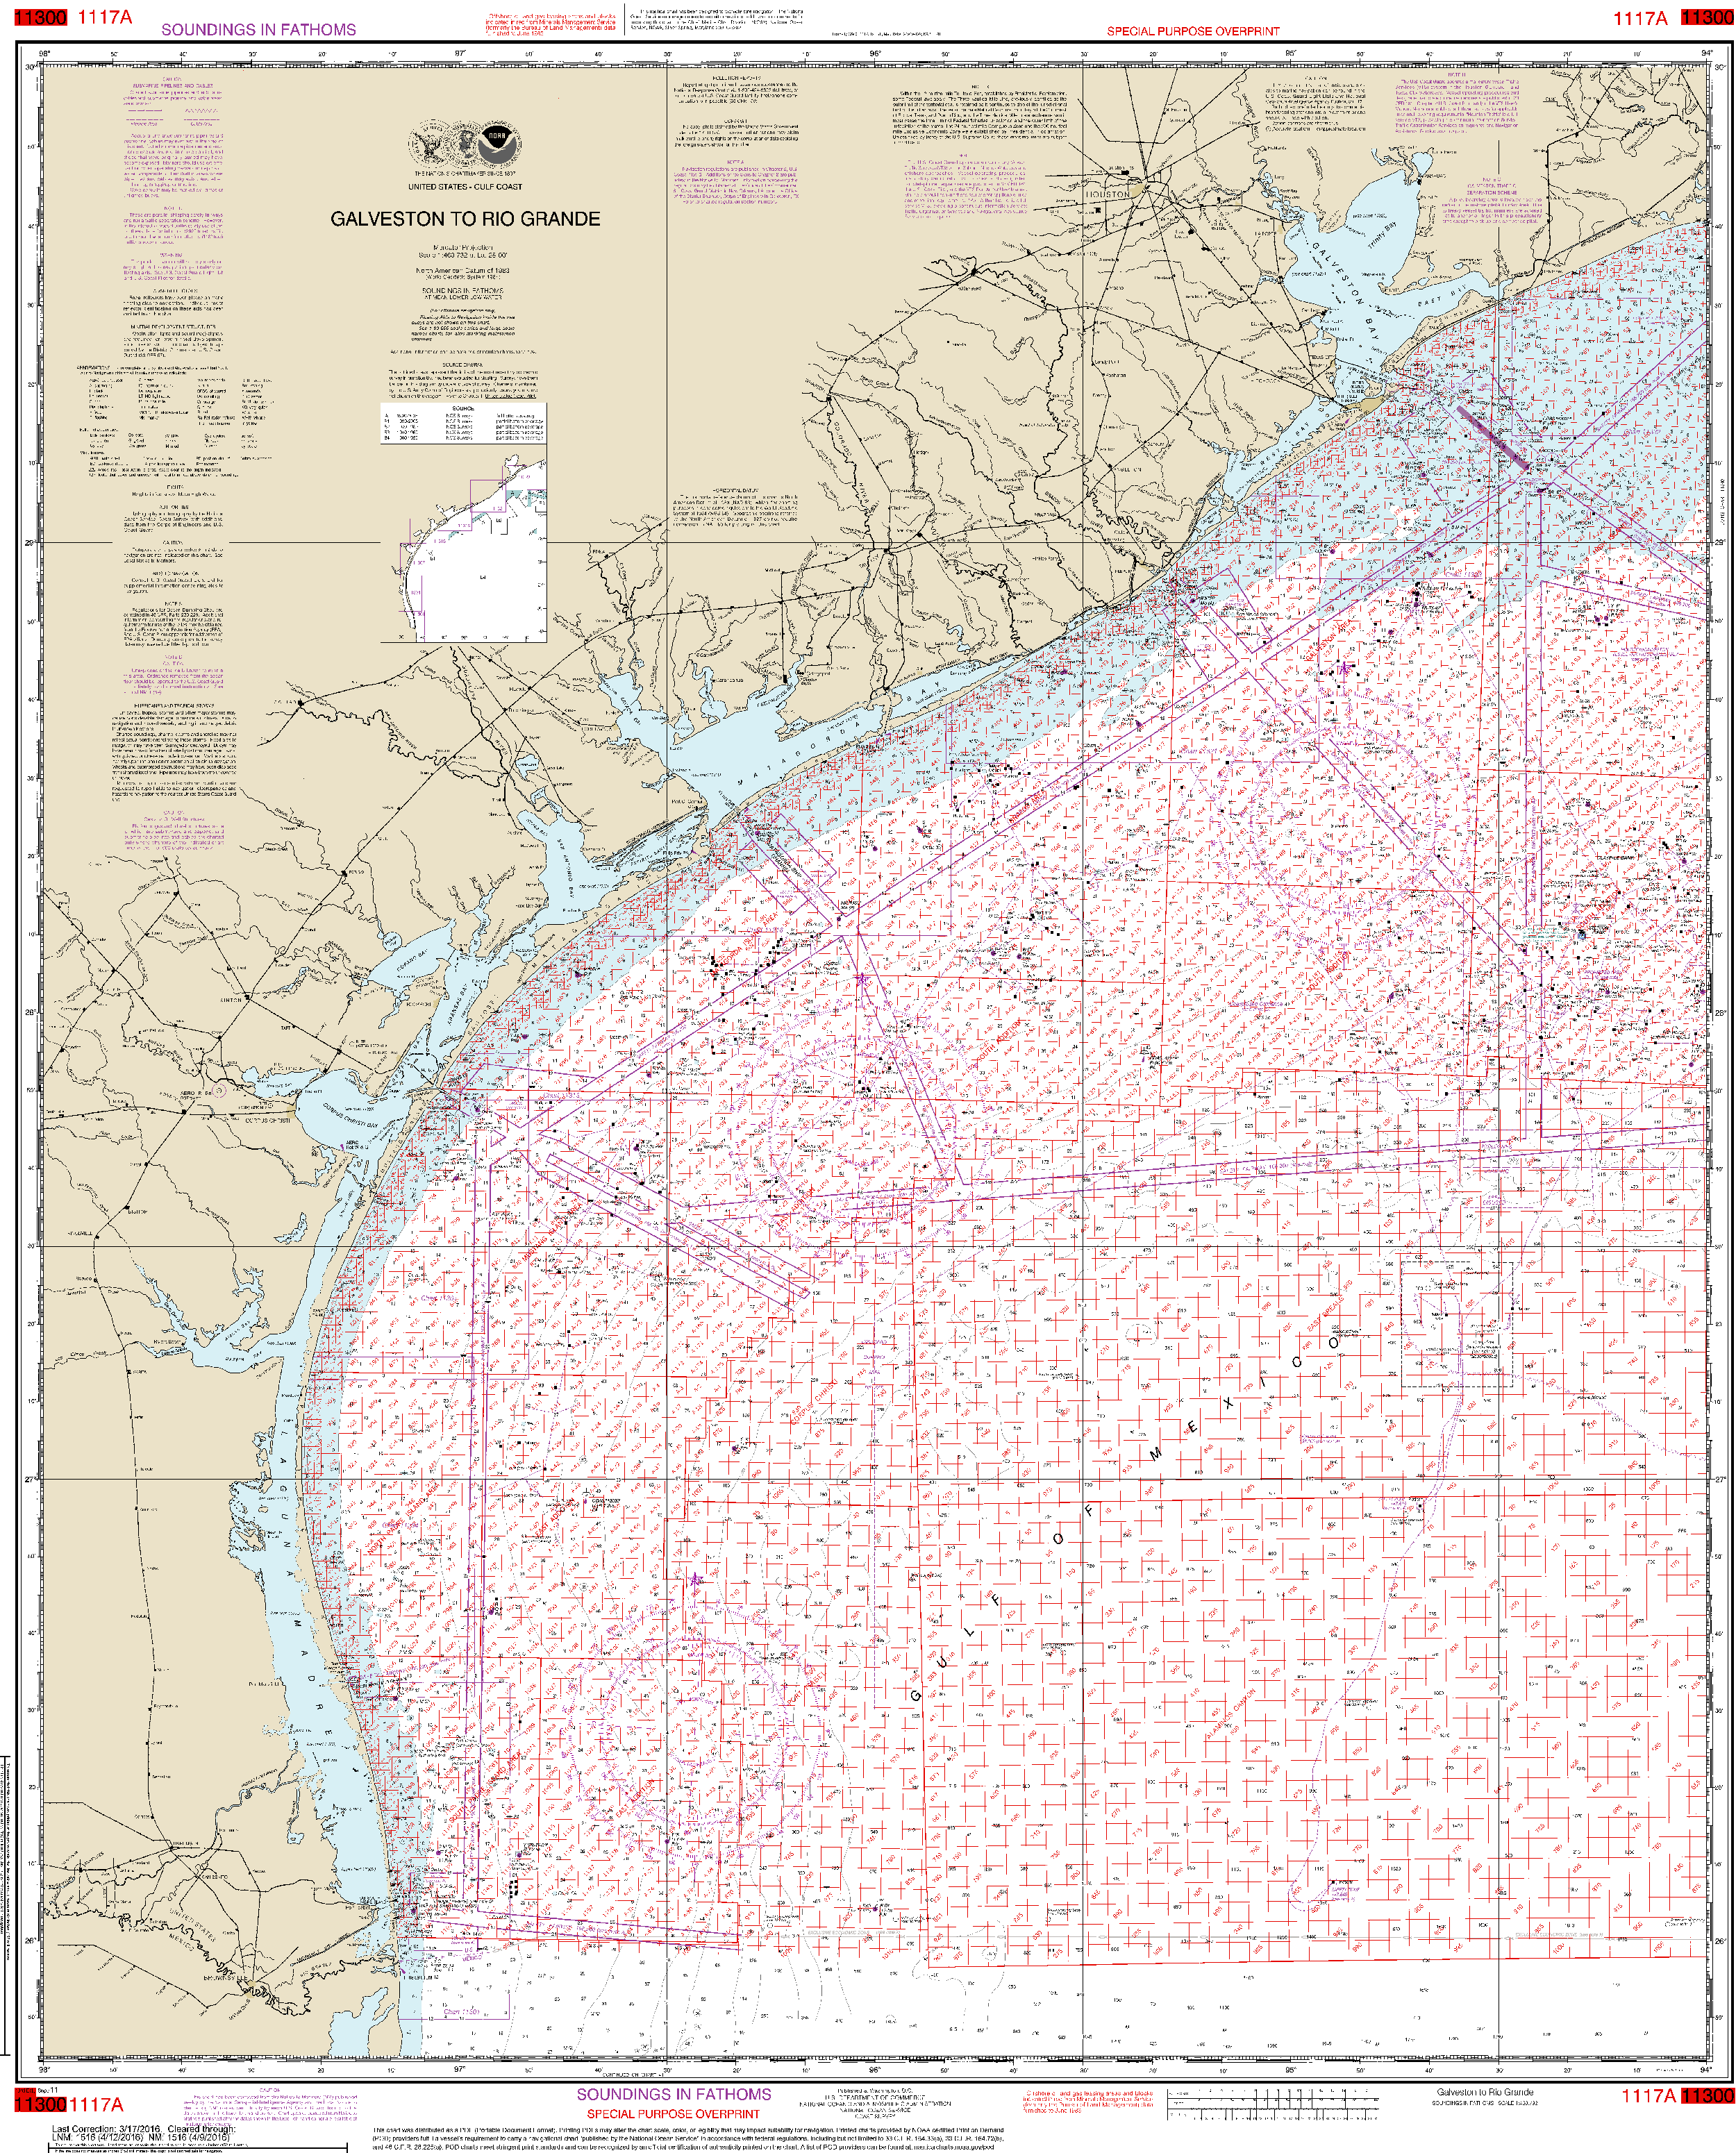 NOAA Nautical Chart 1117A: Galveston to Rio Grande (Oil and Gas Leasing Areas)